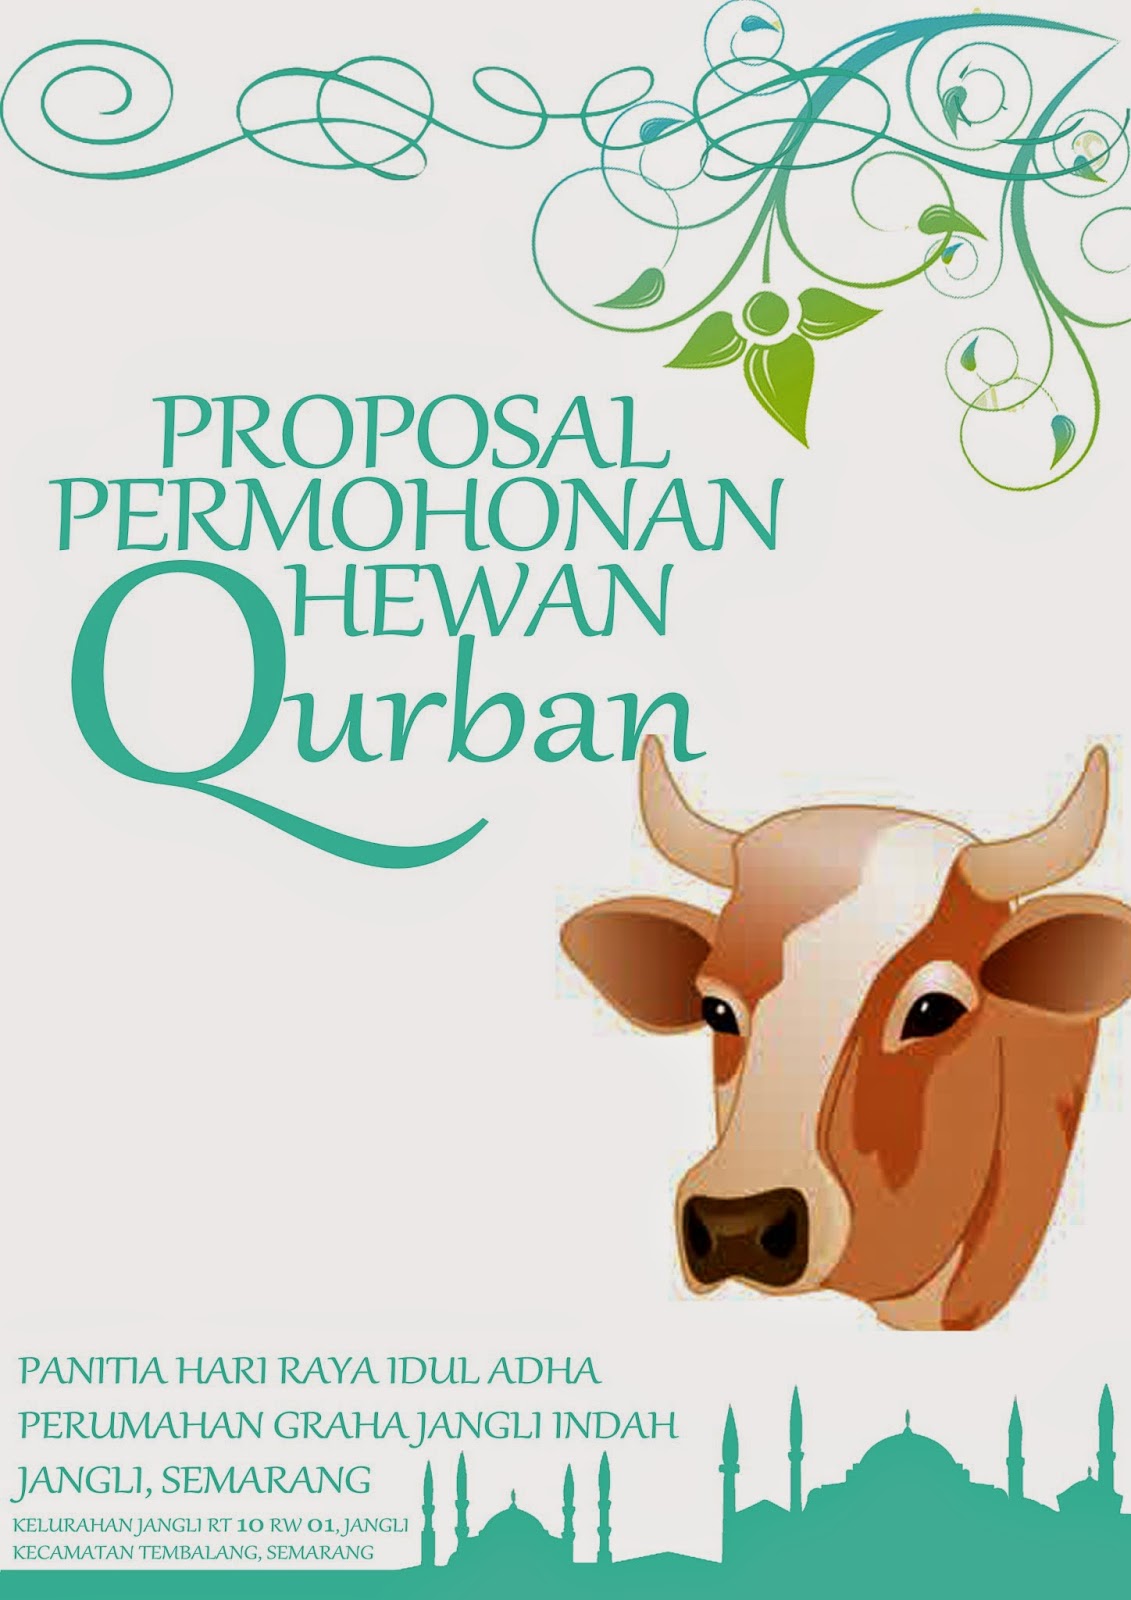 Proposal Panitia  Qurban  SUKADESAIN